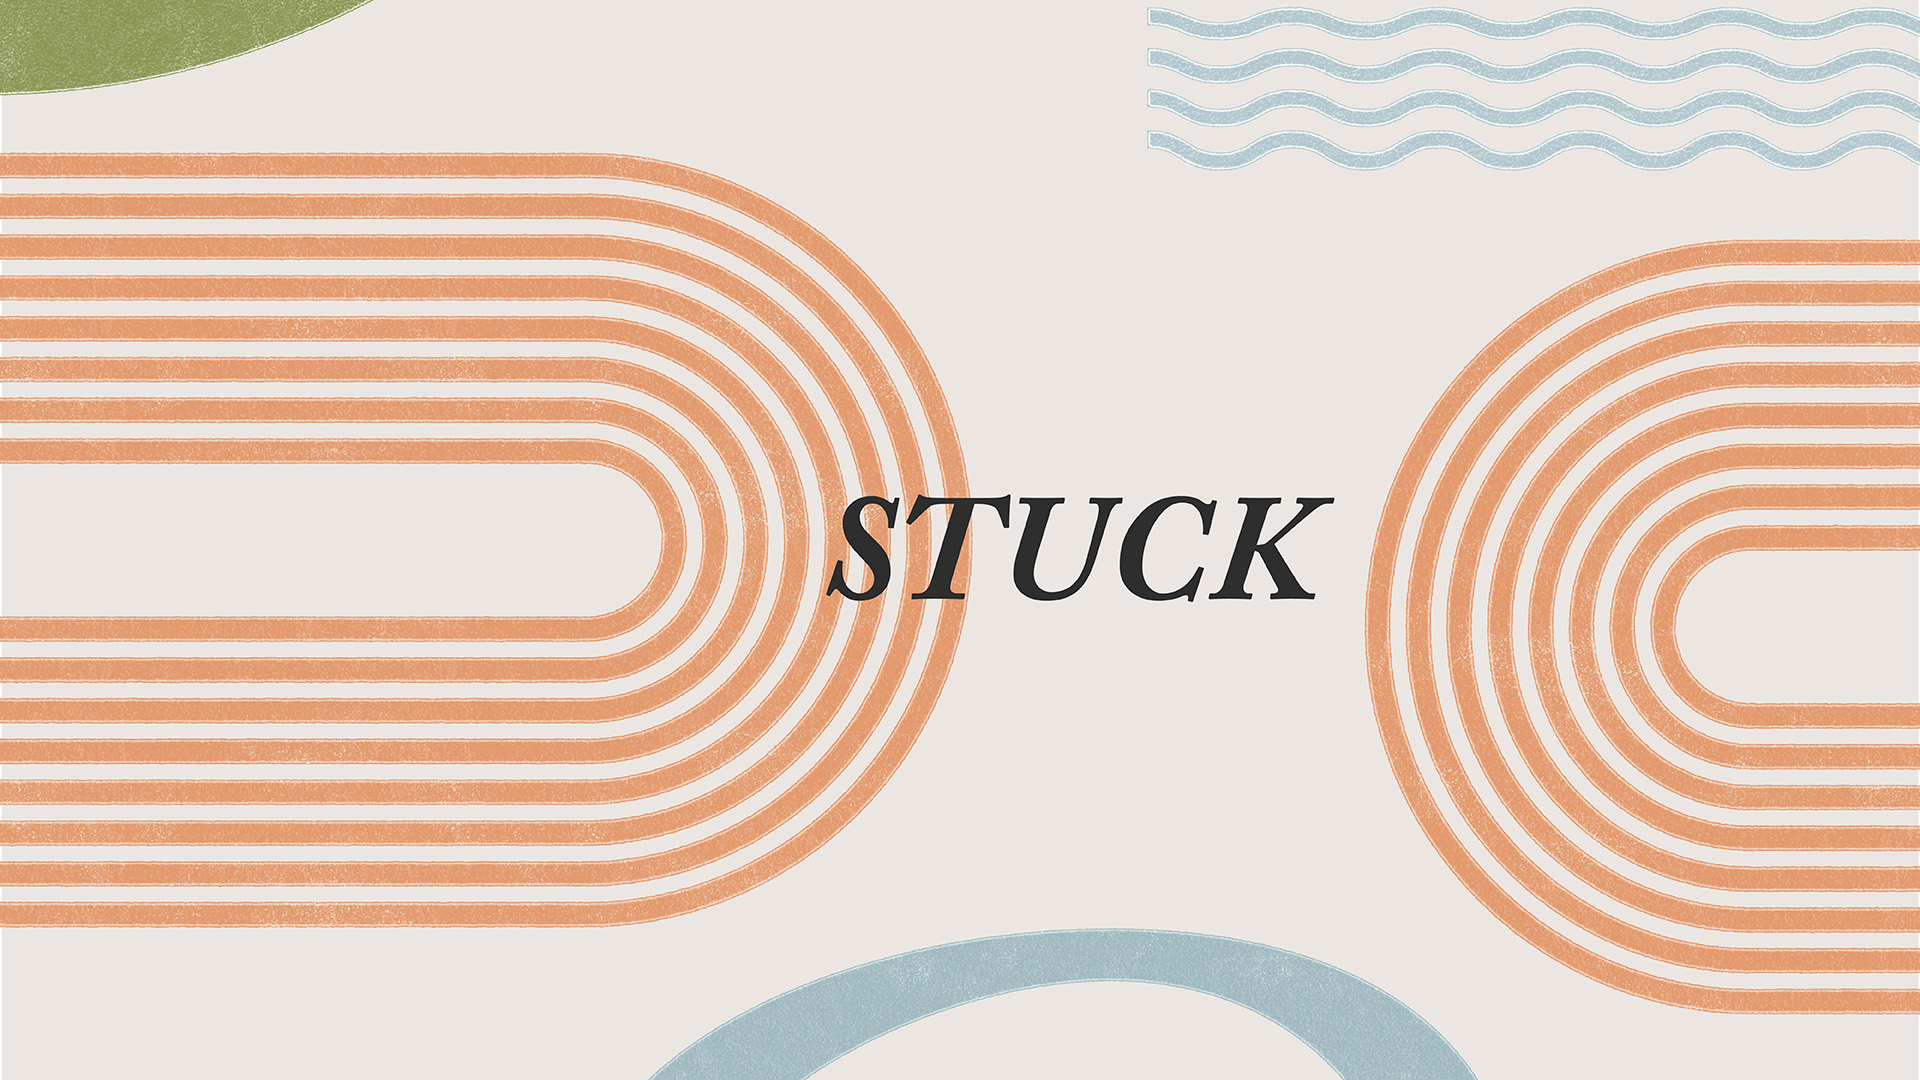 Series: Stuck